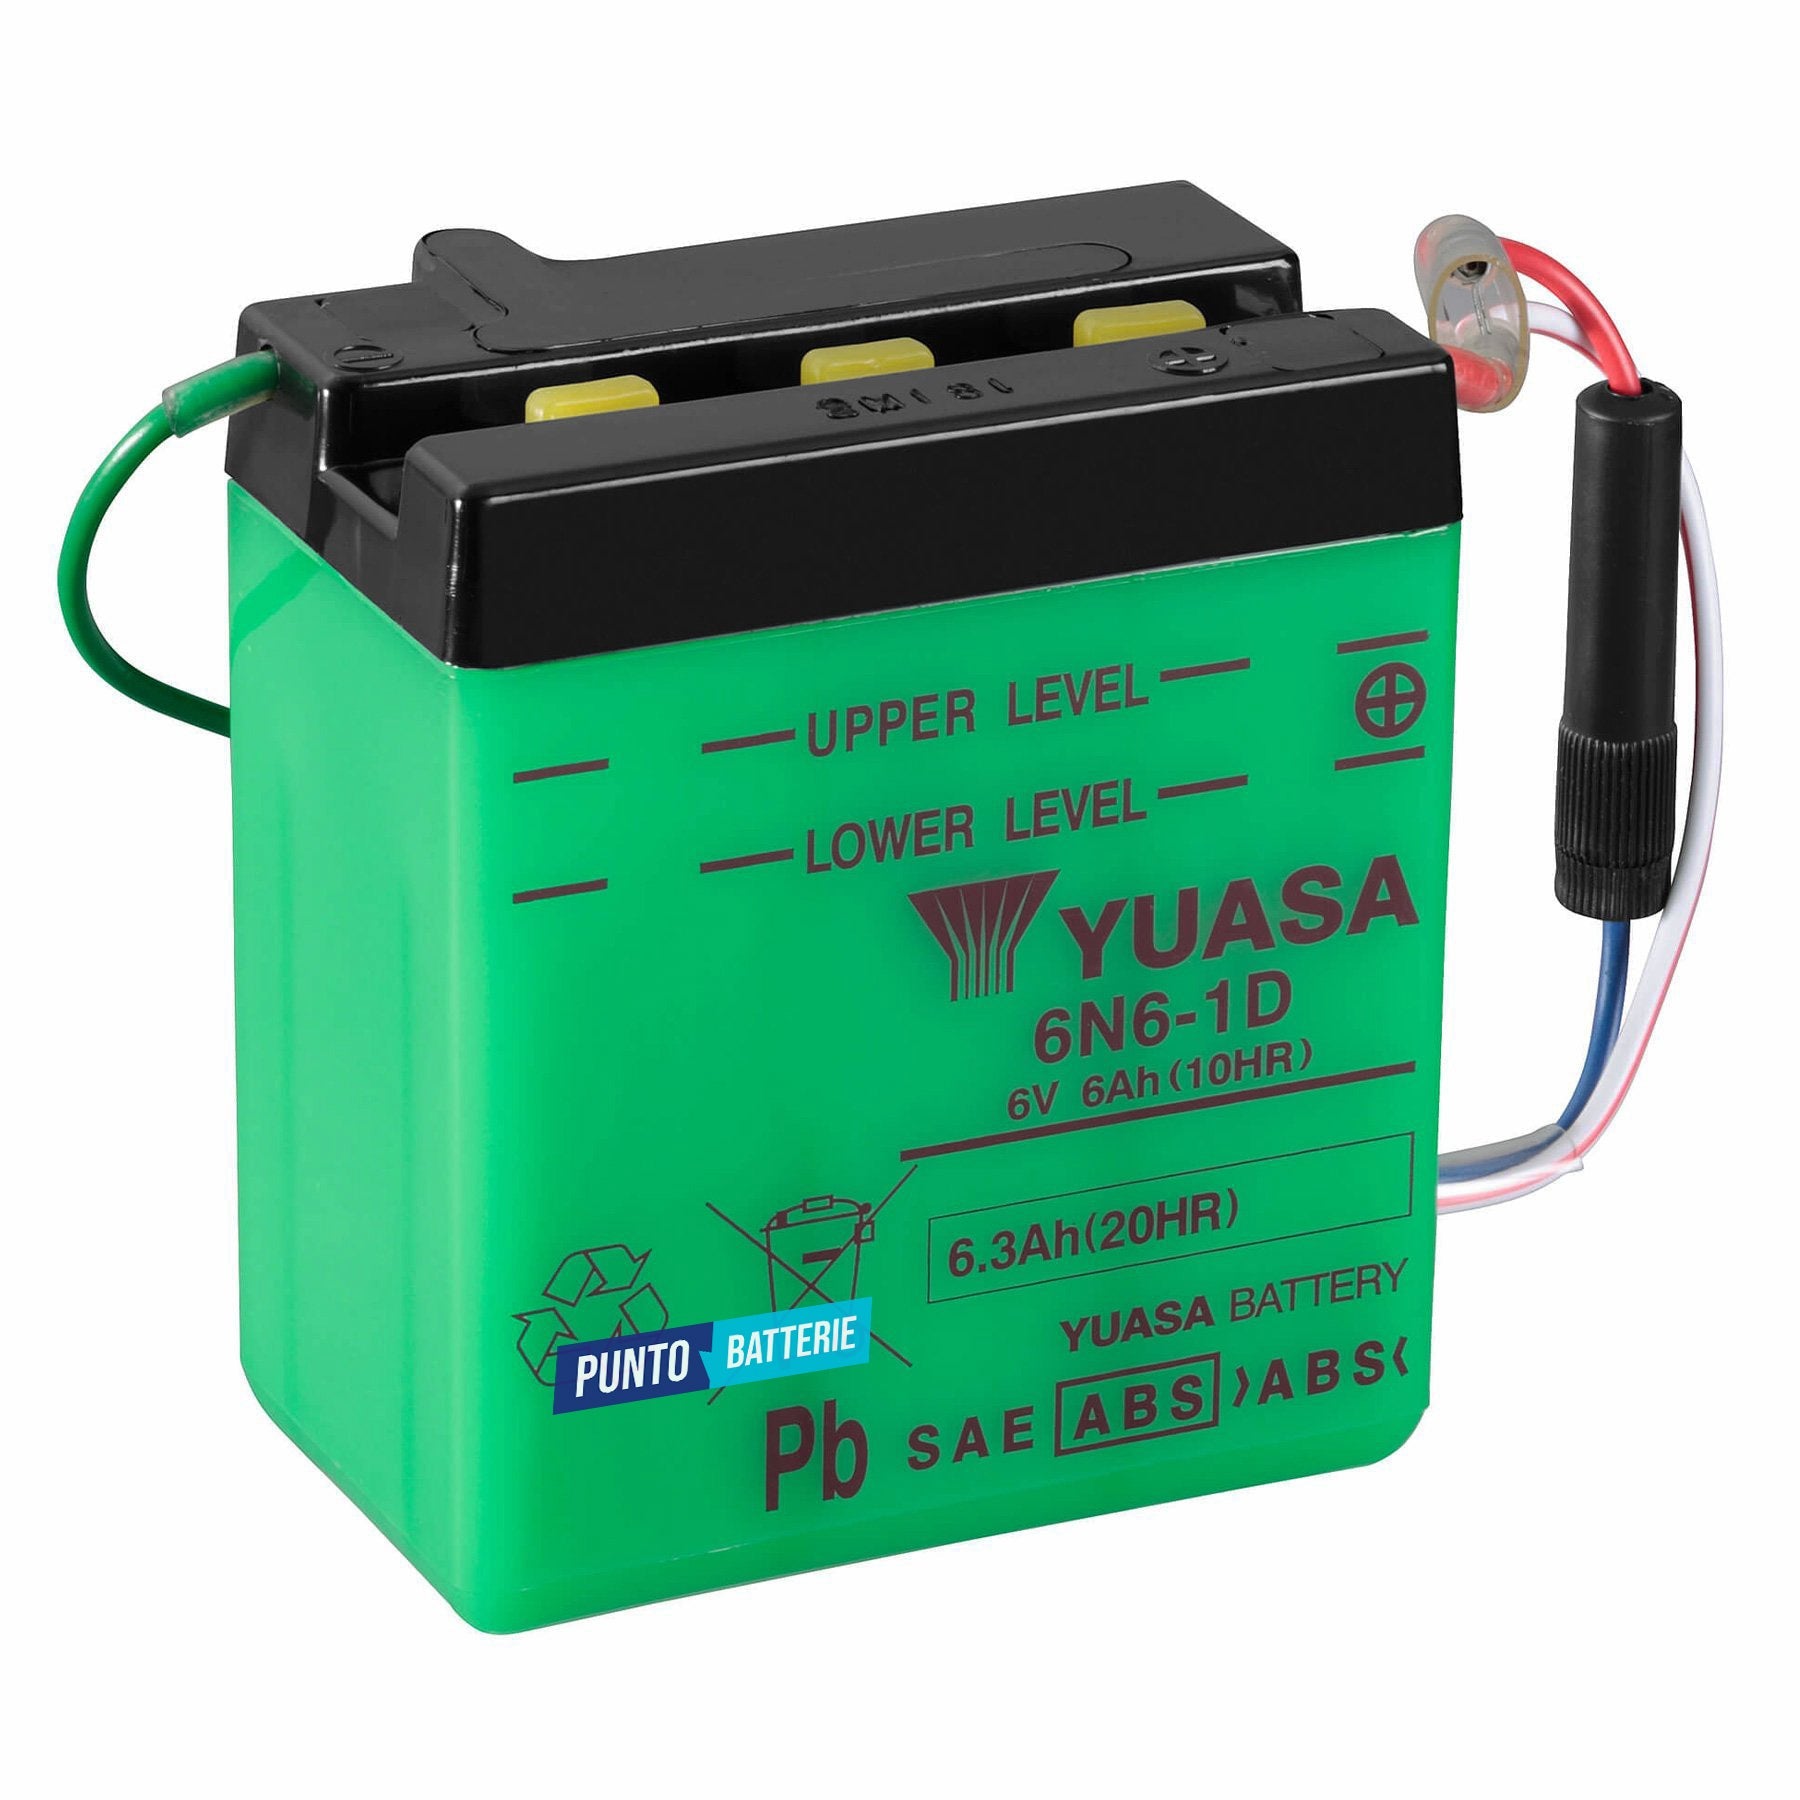 Batteria originale Yuasa Conventional 6N6-1D, dimensioni 99 x 57 x 111, polo positivo a destra, 6 volt, 6 amperora. Batteria per moto, scooter e powersport.